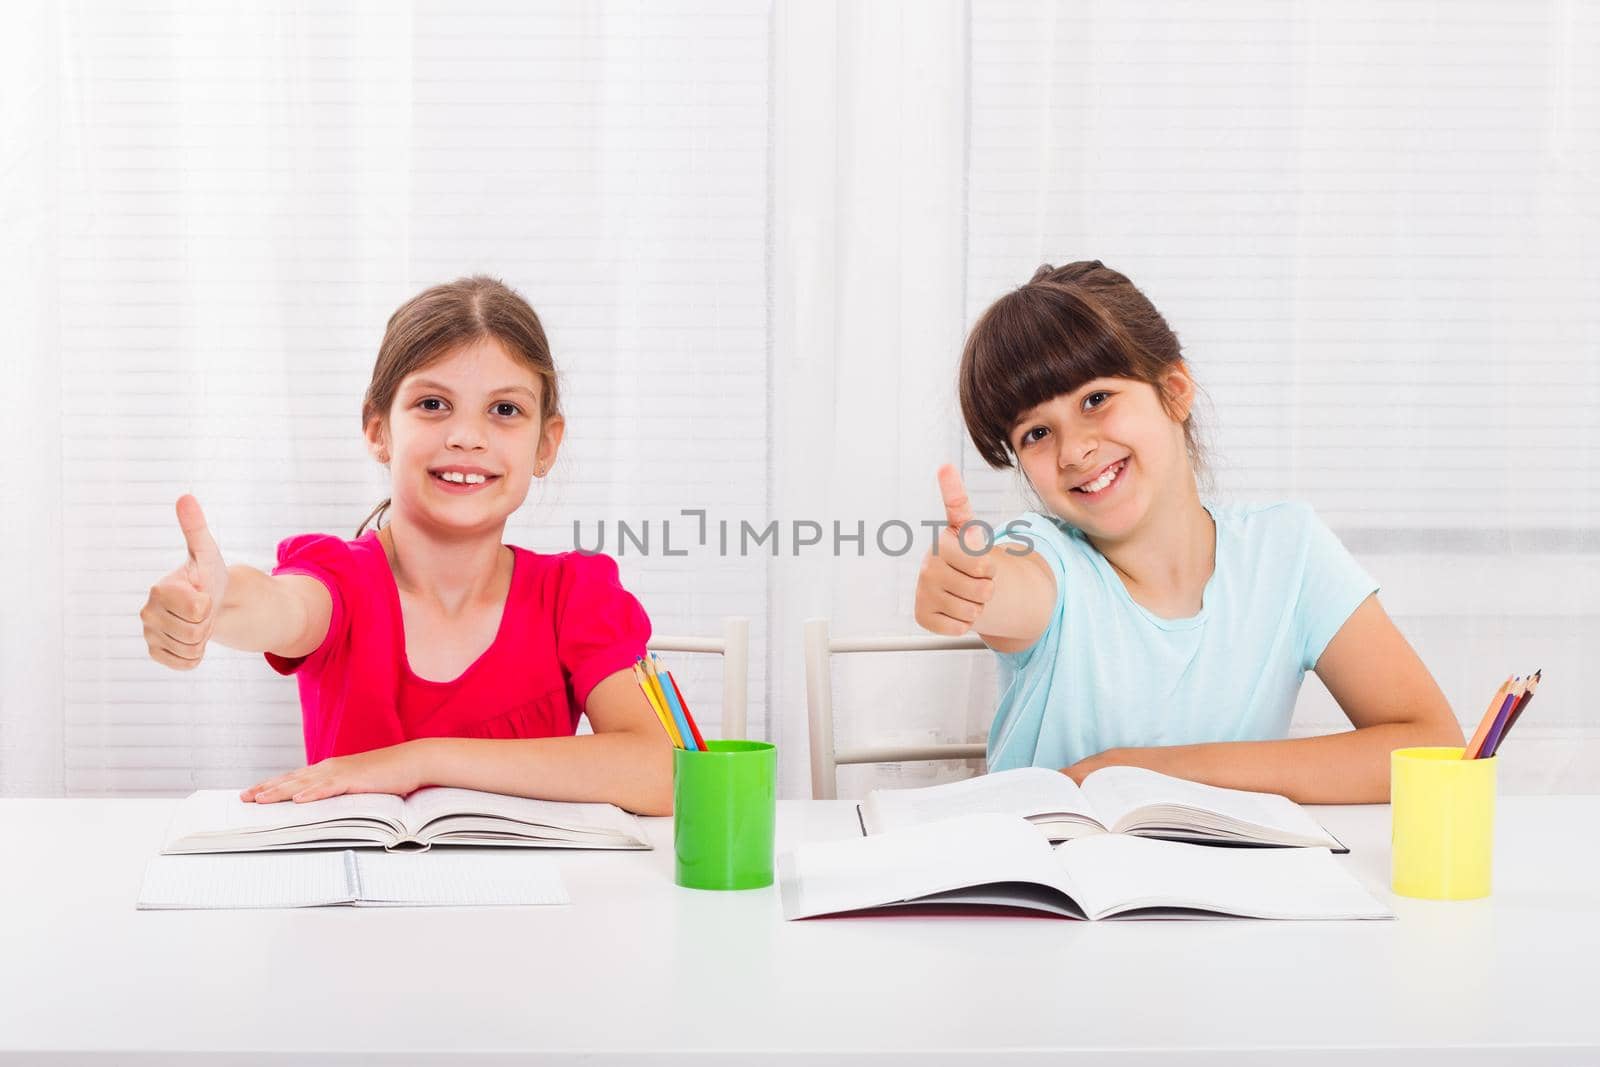 Two happy smiling schoolgirls showing thumbs up